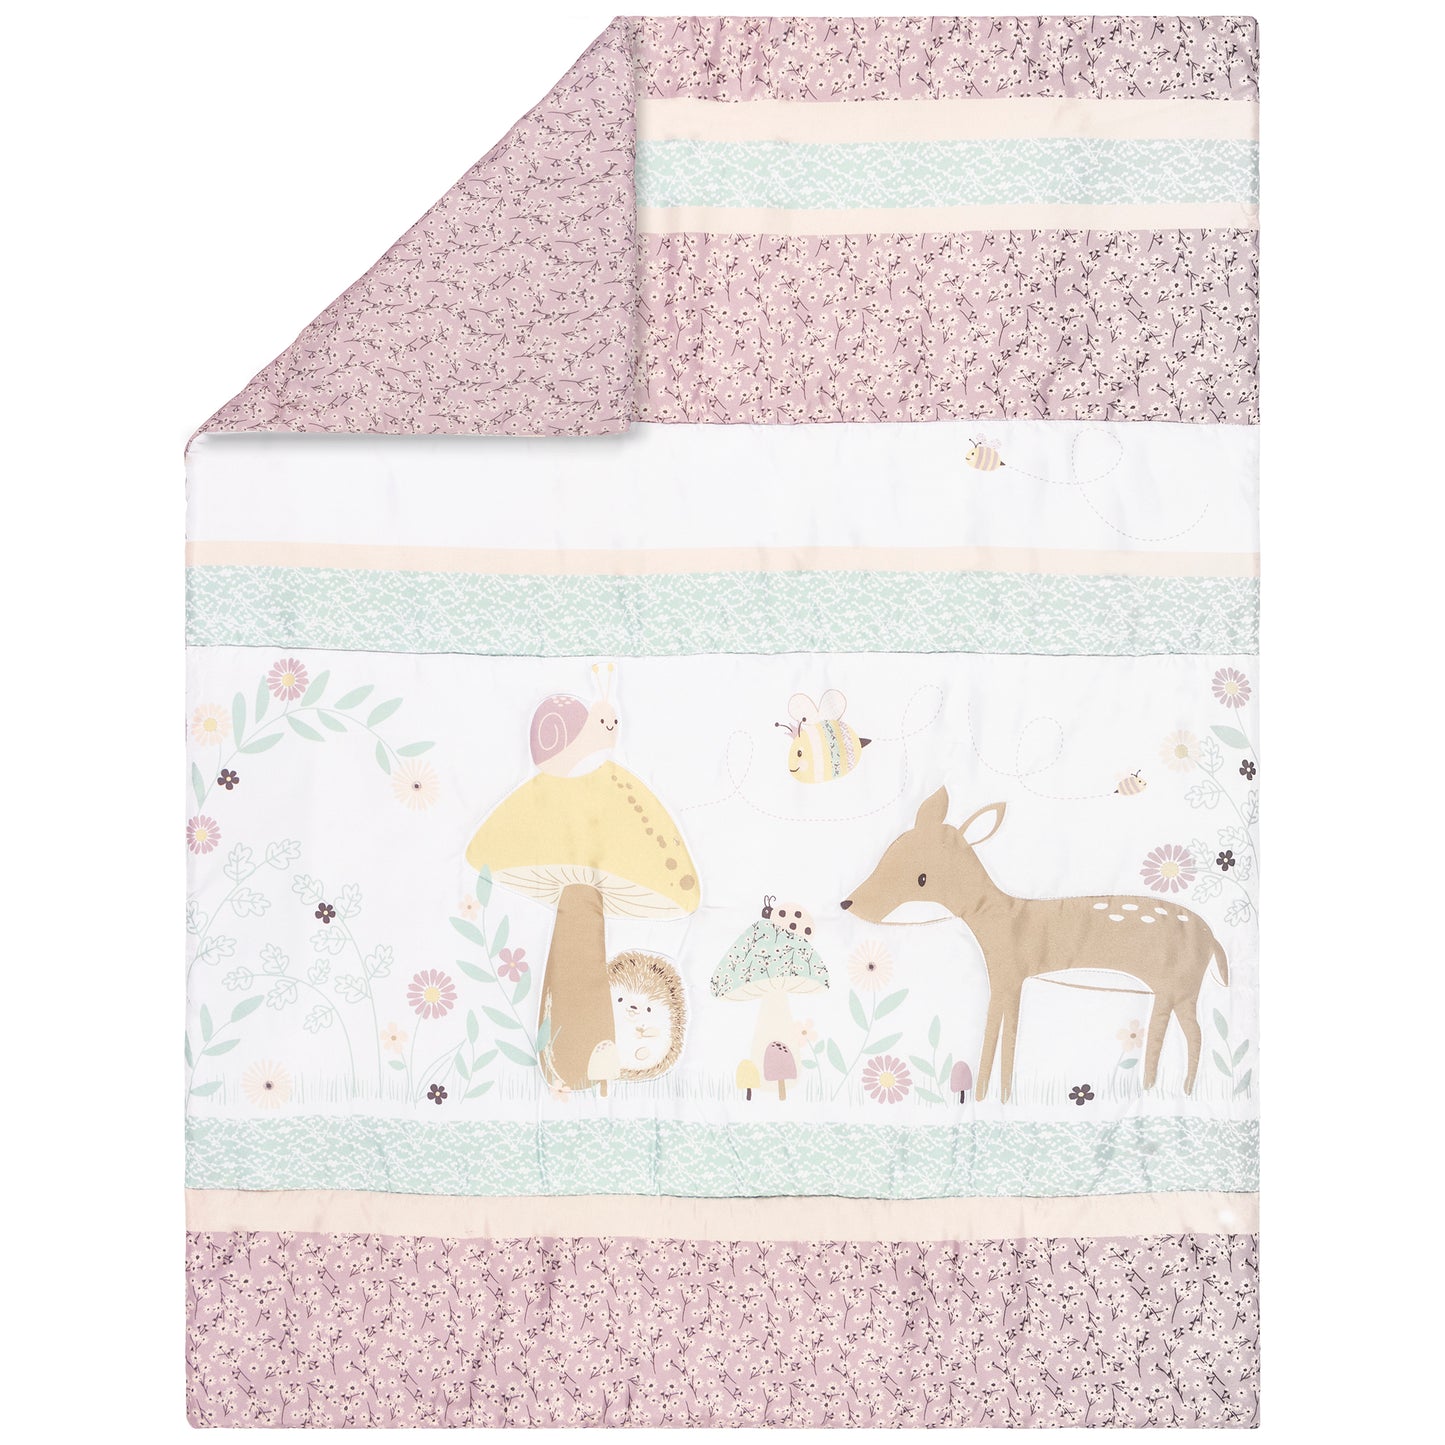  Enchanted Garden 4 Piece Crib Bedding Set by Sammy & Lou® nursery quikt/playmat with folded corner featuring reverse side 